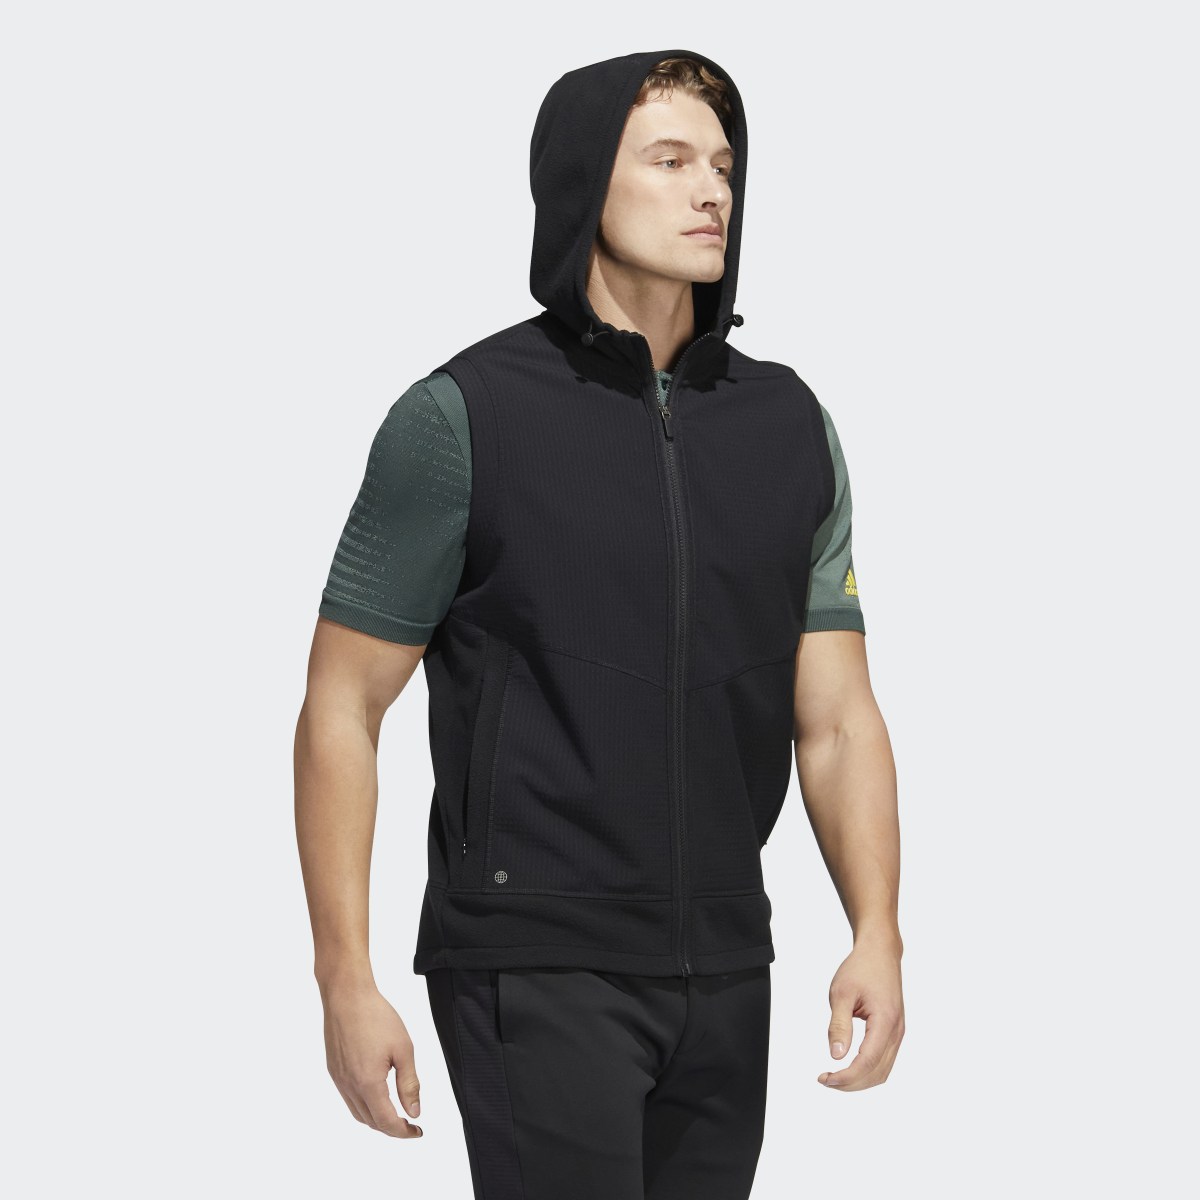 Adidas Statement Full-Zip Hooded Vest. 5